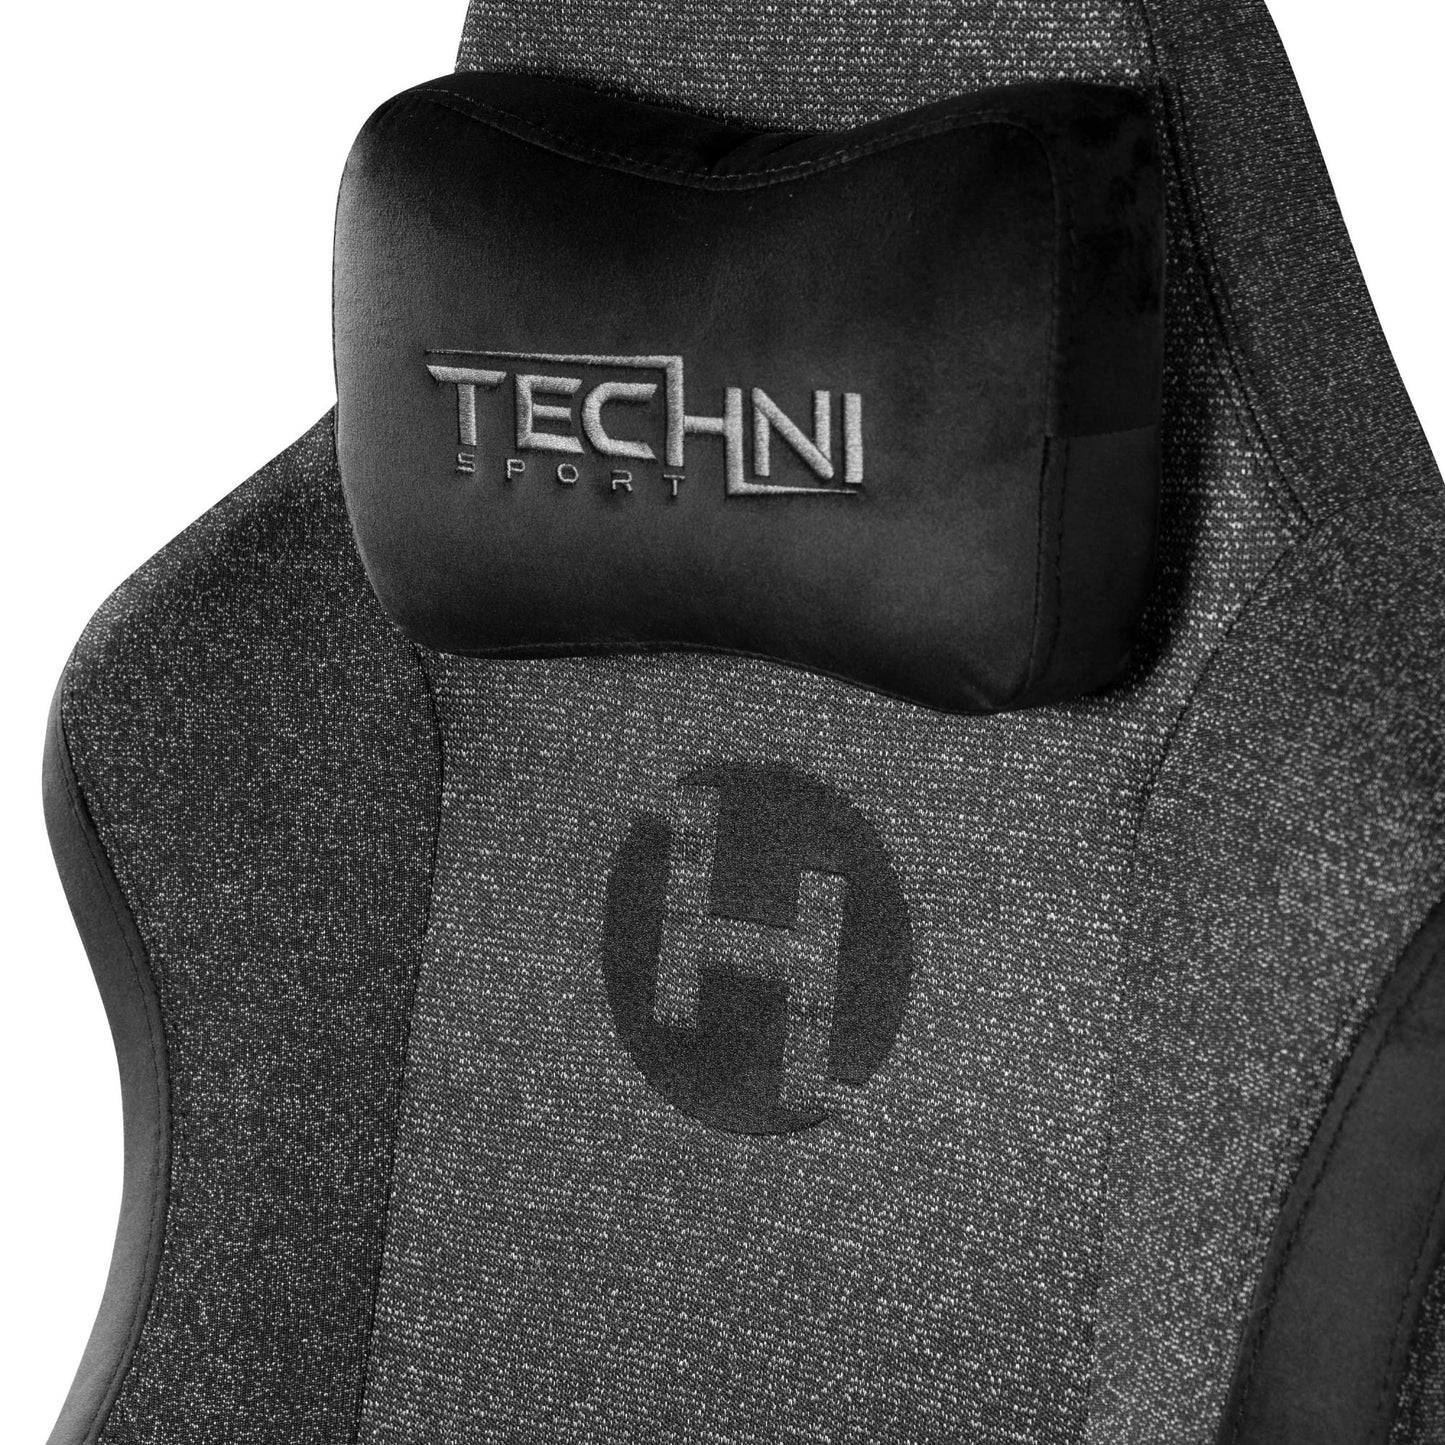 Techni Sport Fabric Memory Foam Gaming Chair